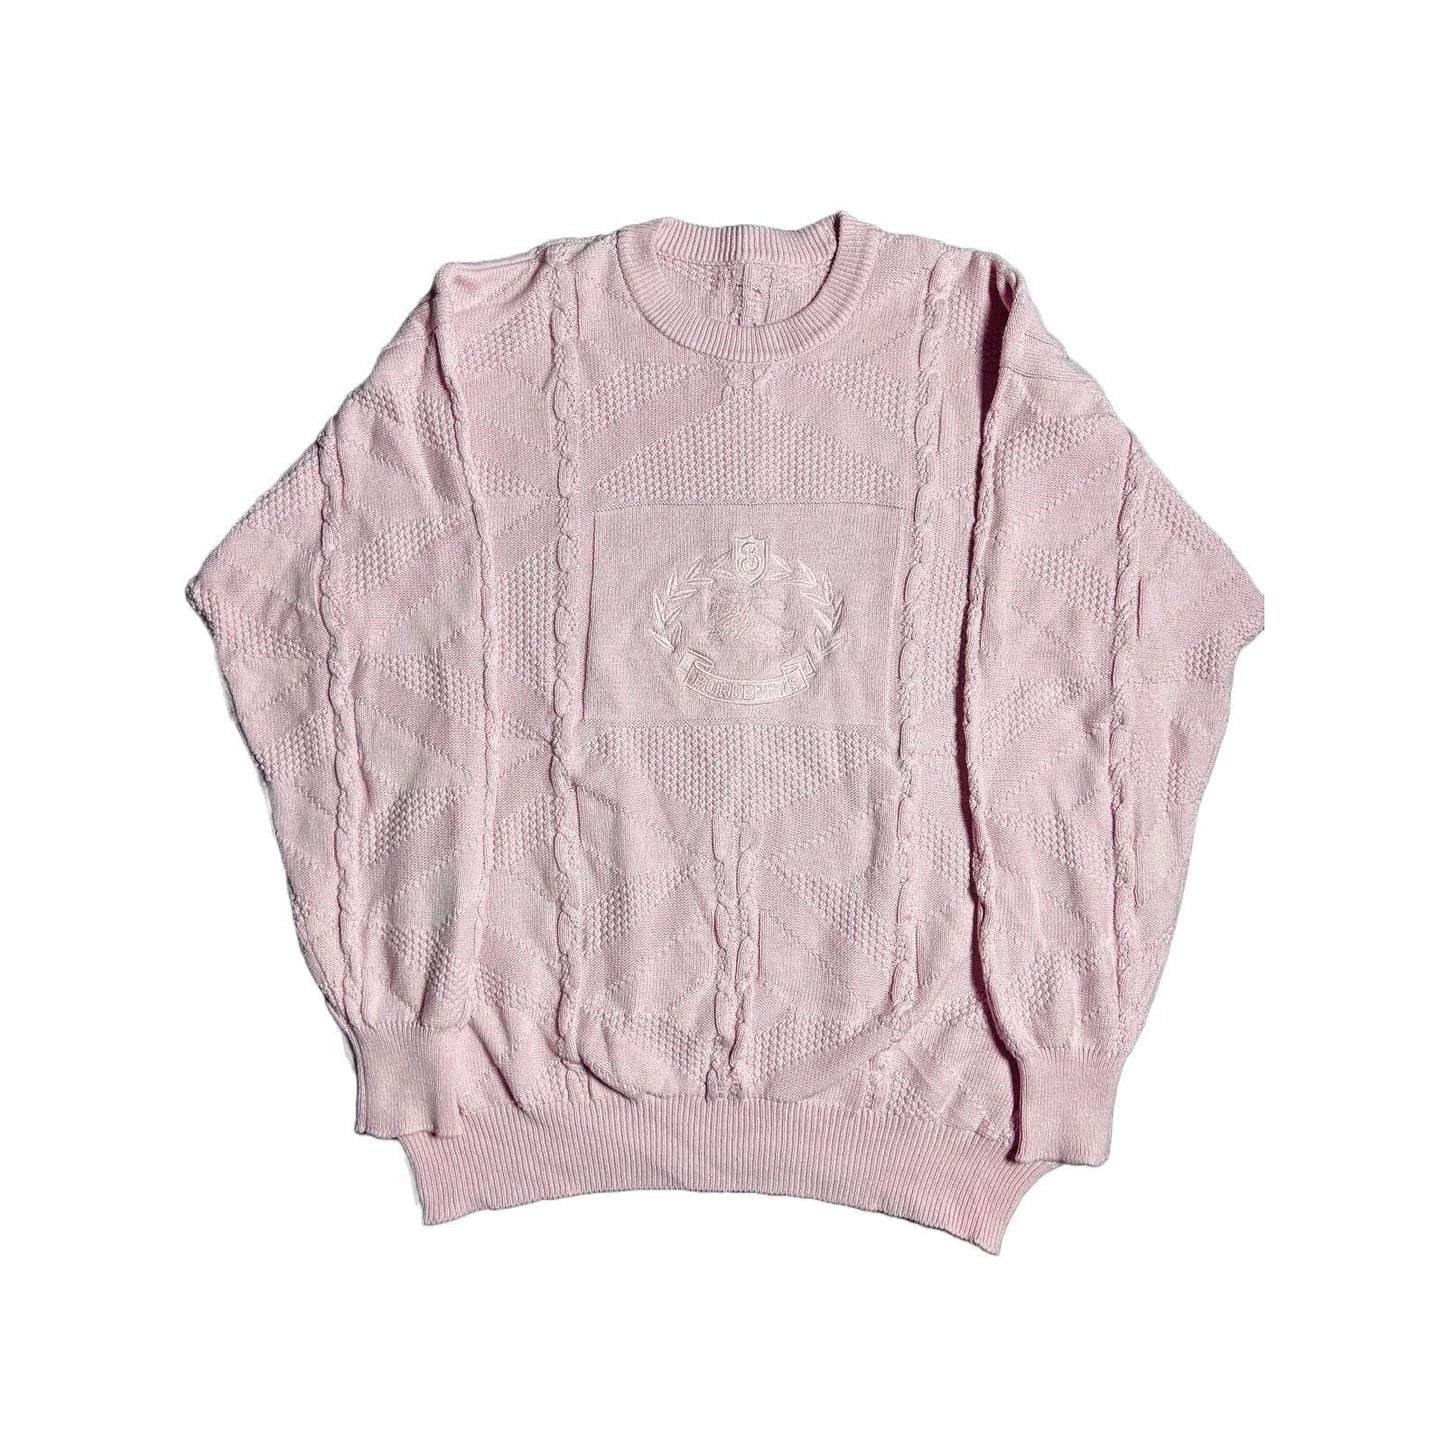 Burberrys sweater big logo vintage pink